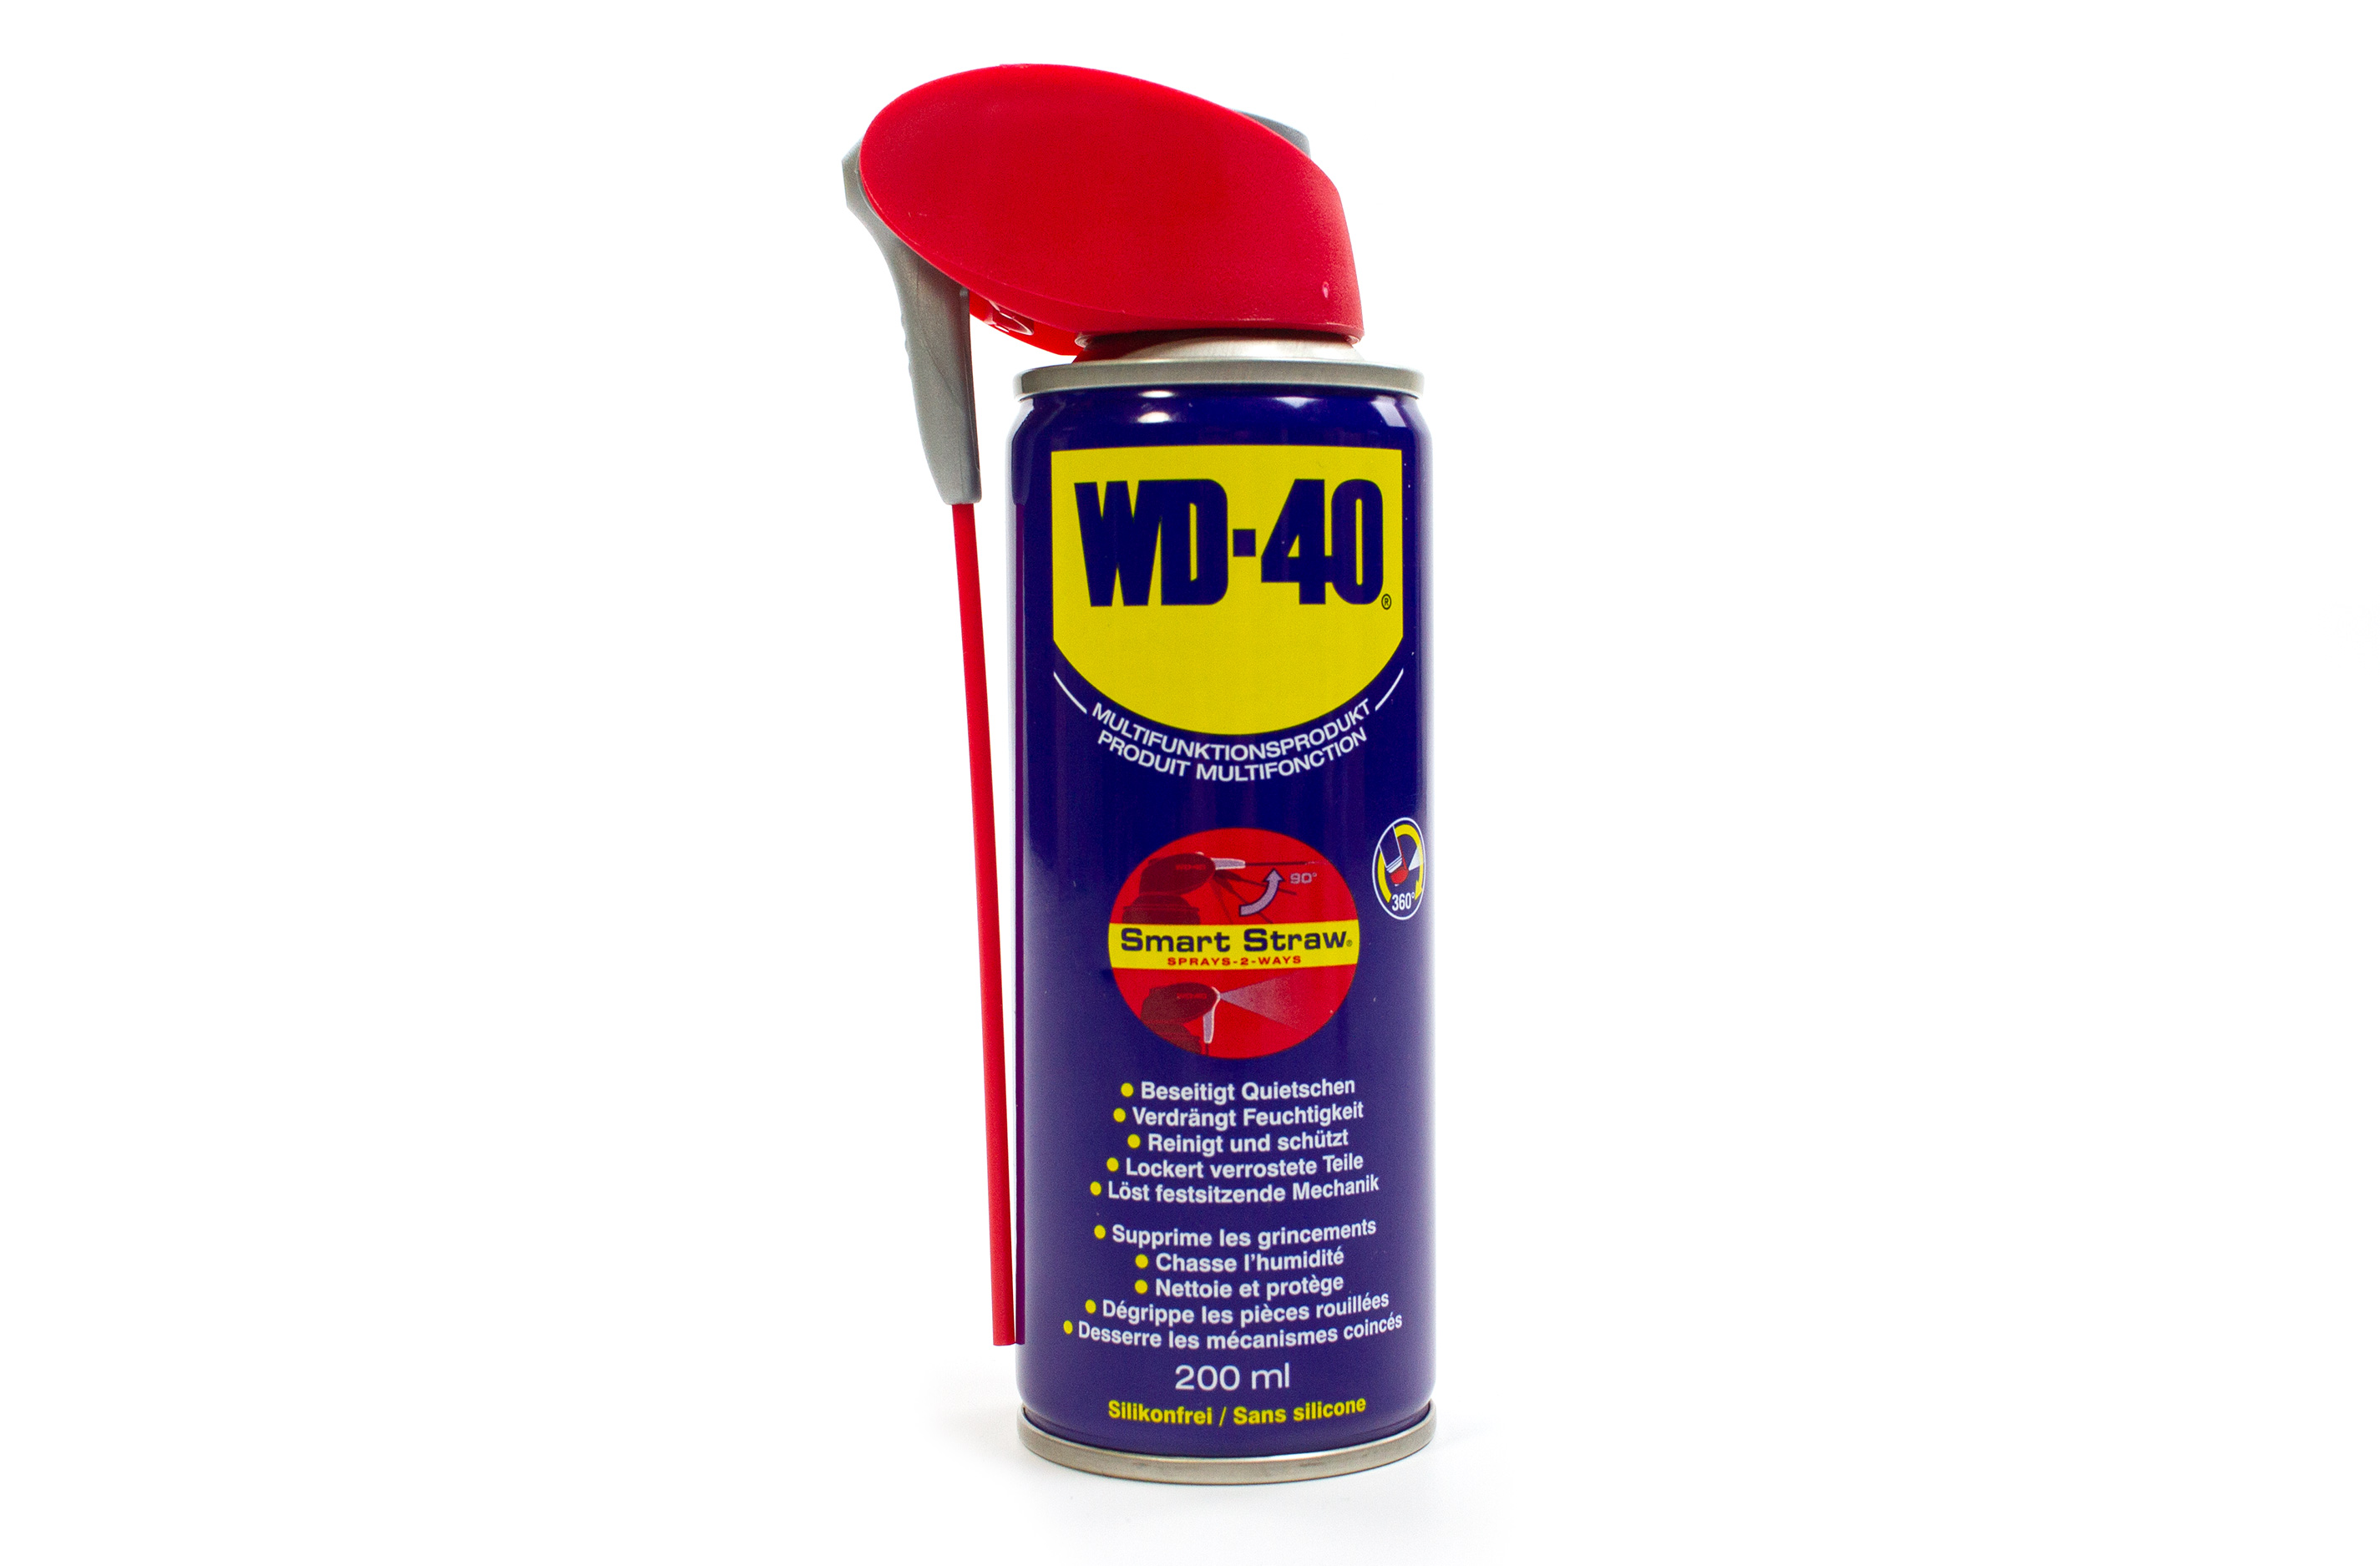 WD-40 Smart Straw Multi function oil